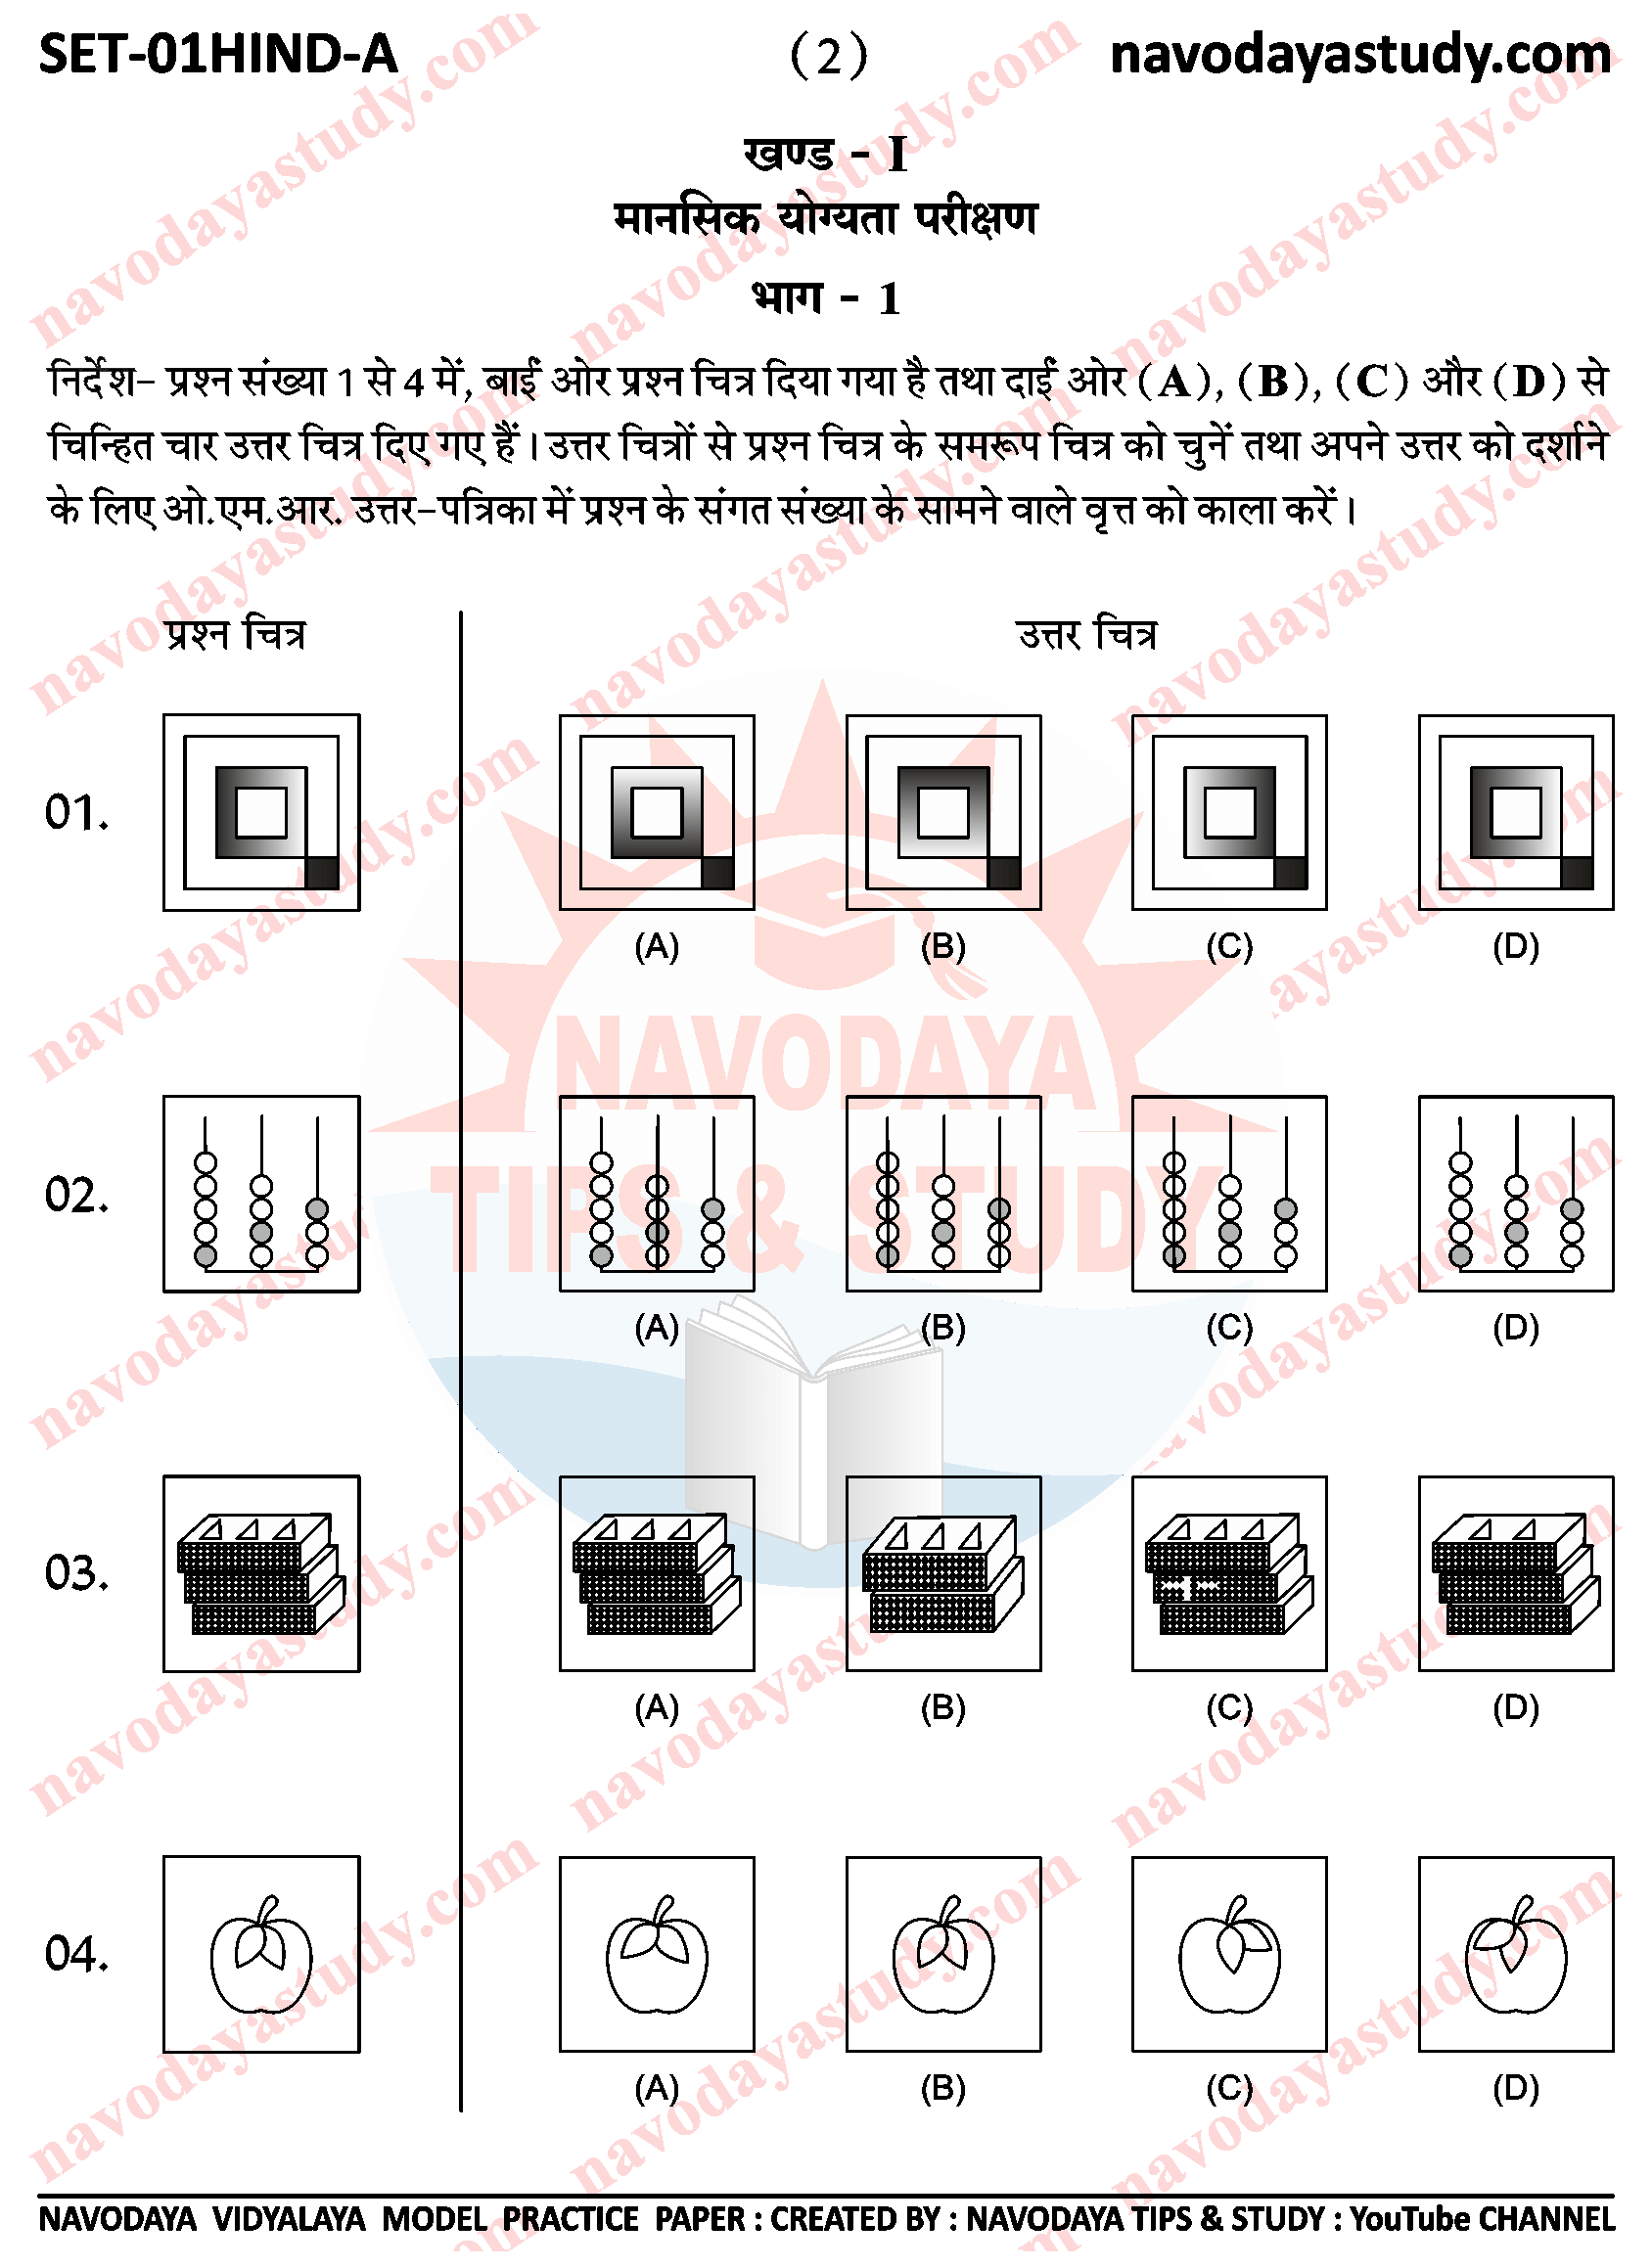 Navodaya Model Paper Class 6 (JNVST) Set - 1 Hind A Page - 02